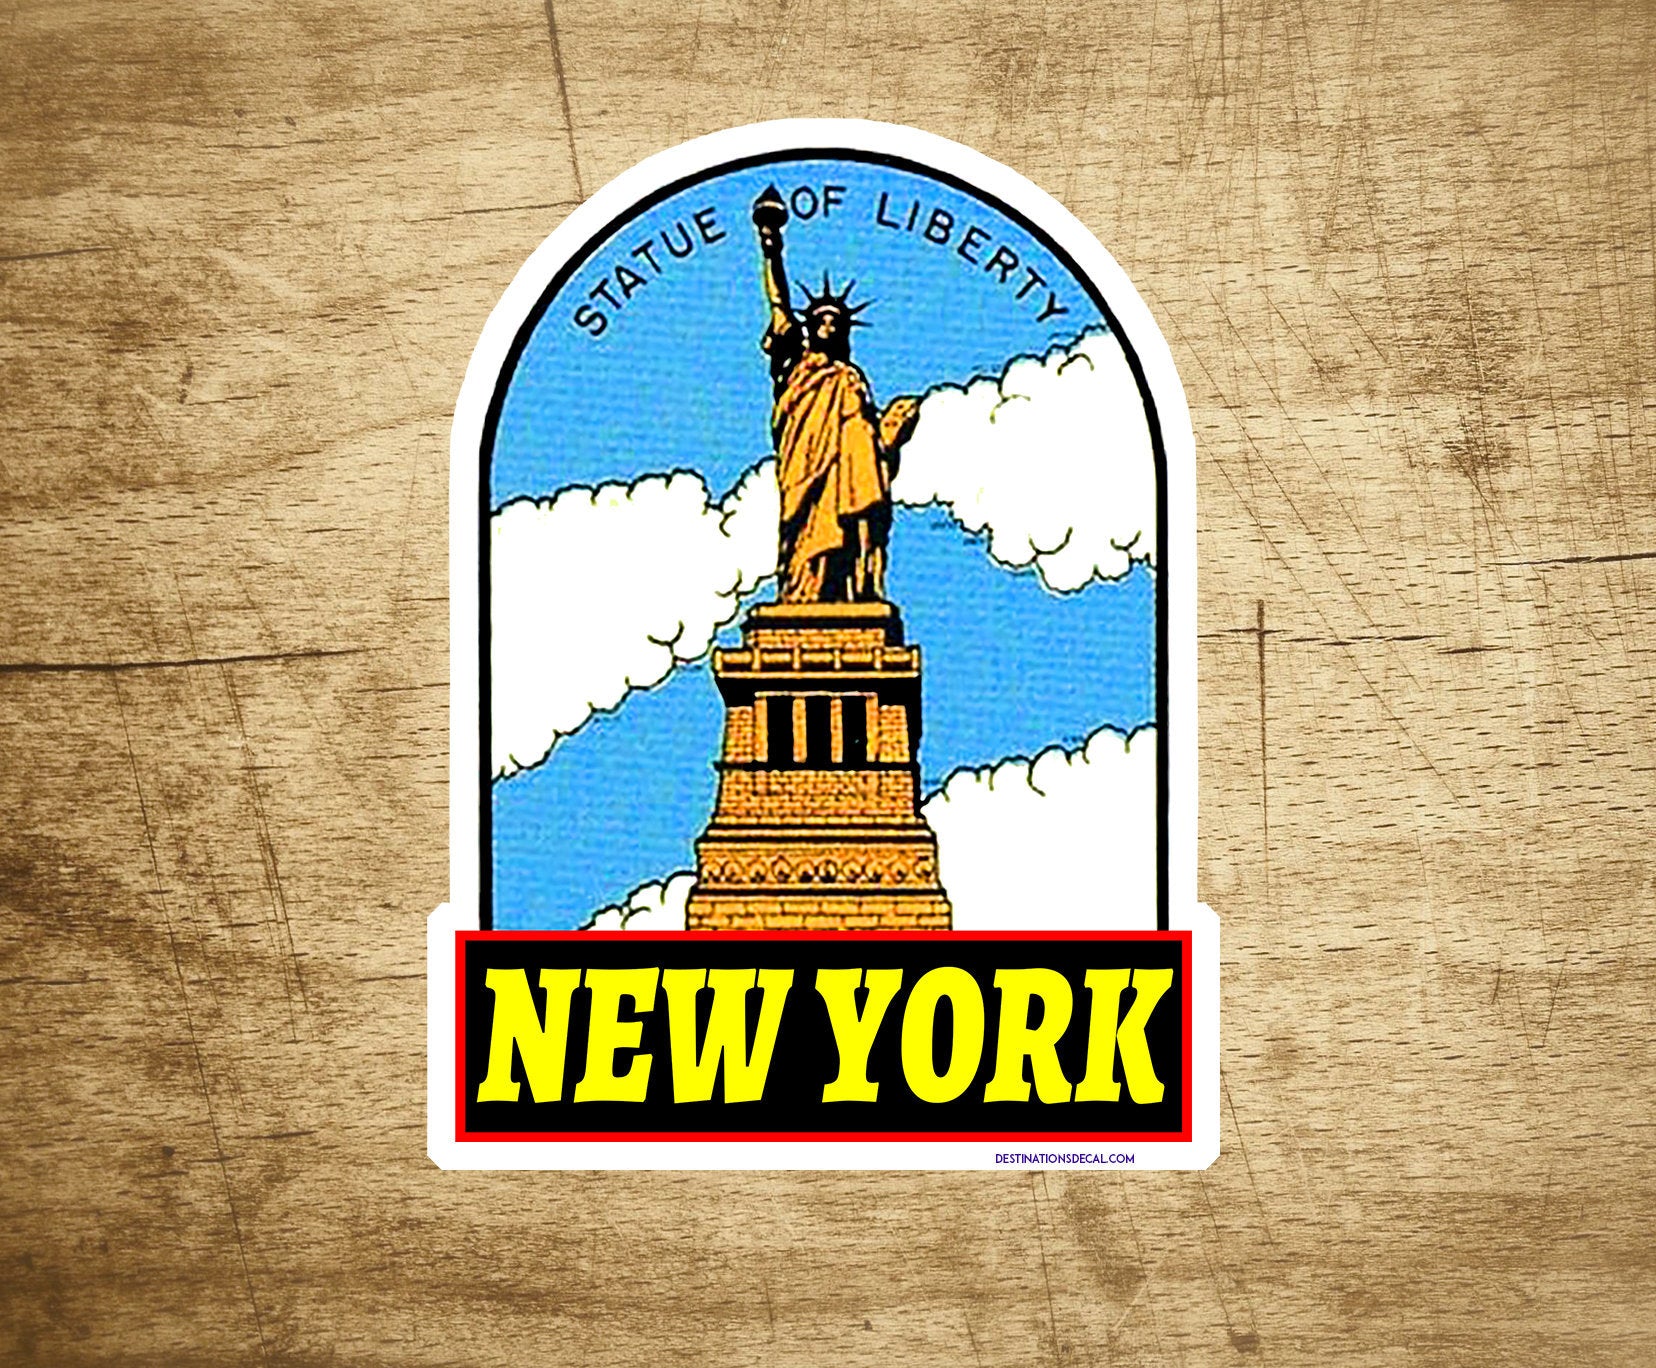 New York Statue Of Liberty Decal Sticker 3.75" x 2.75"  Vinyl Vintage Style